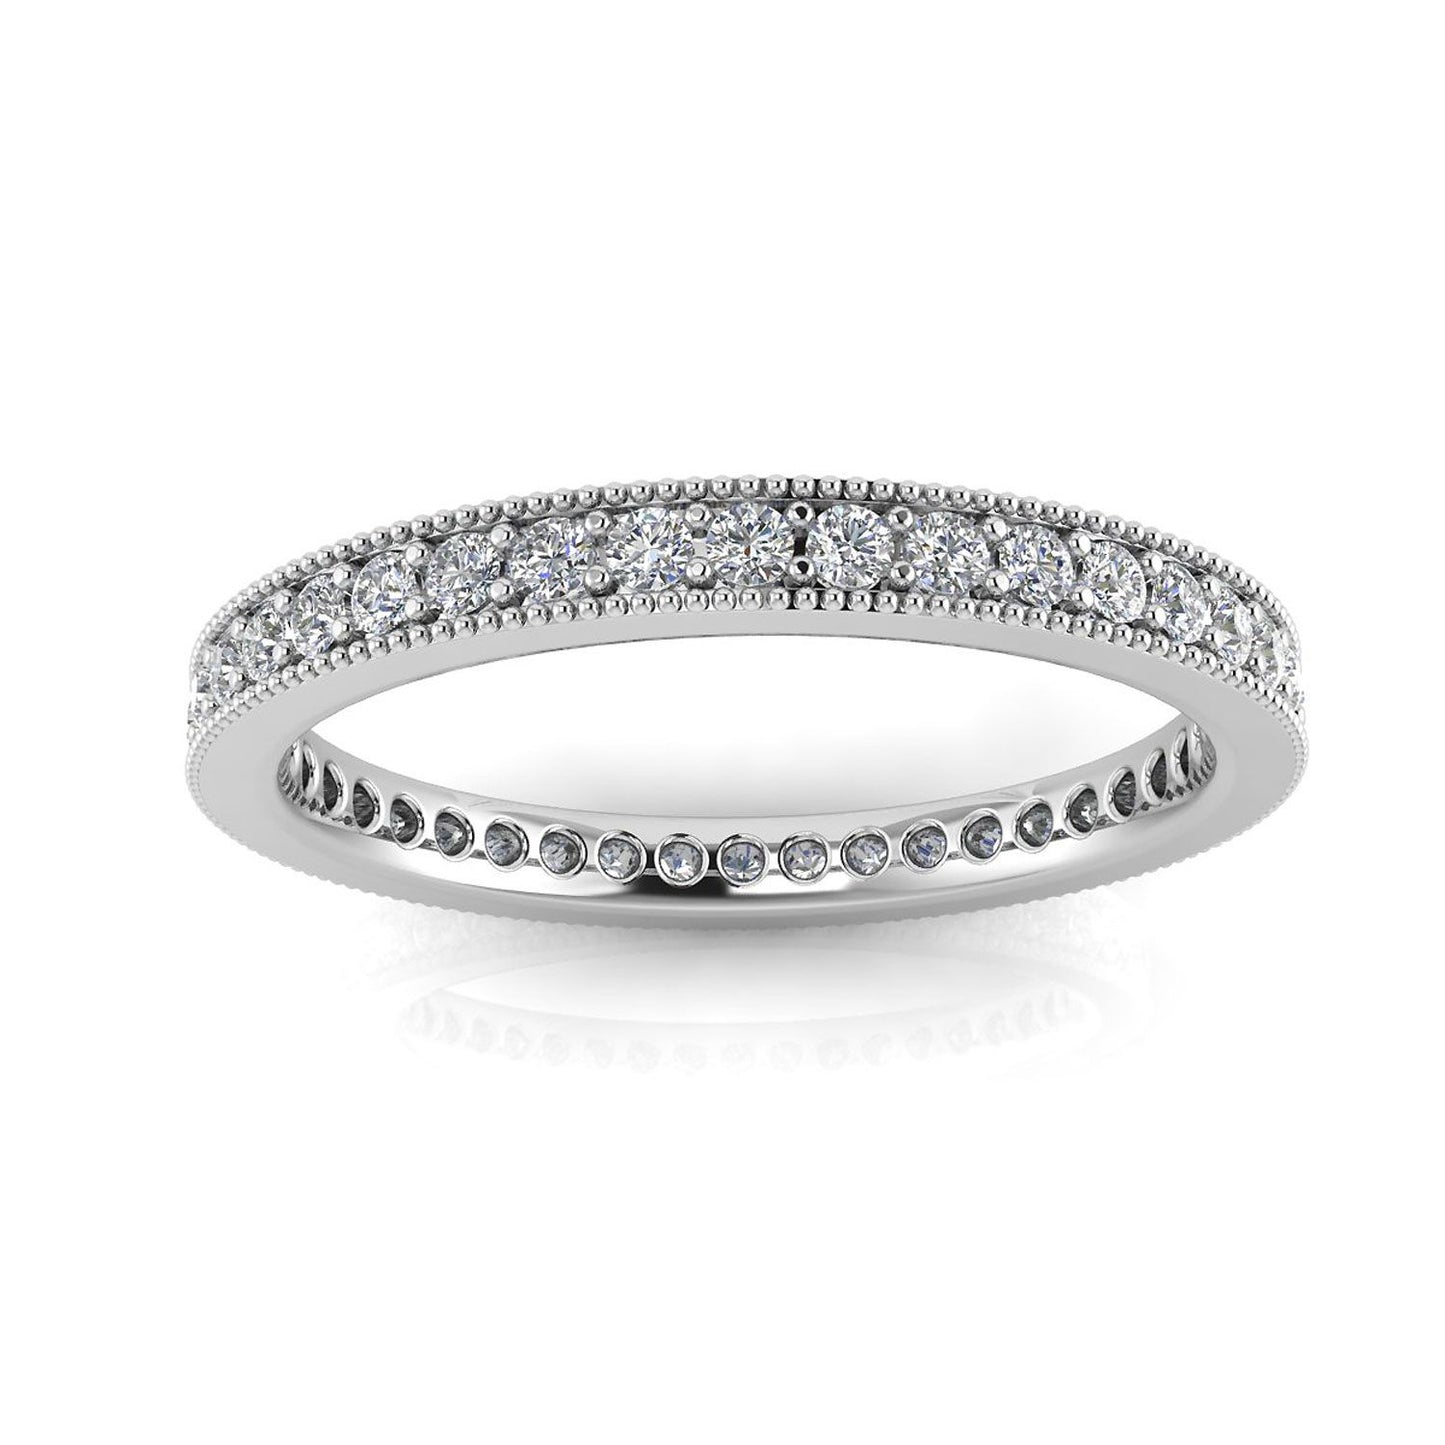 Round Brilliant Cut Diamond Pave & Milgrain Set Eternity Ring In 18k White Gold  (0.3ct. Tw.) Ring Size 5.5